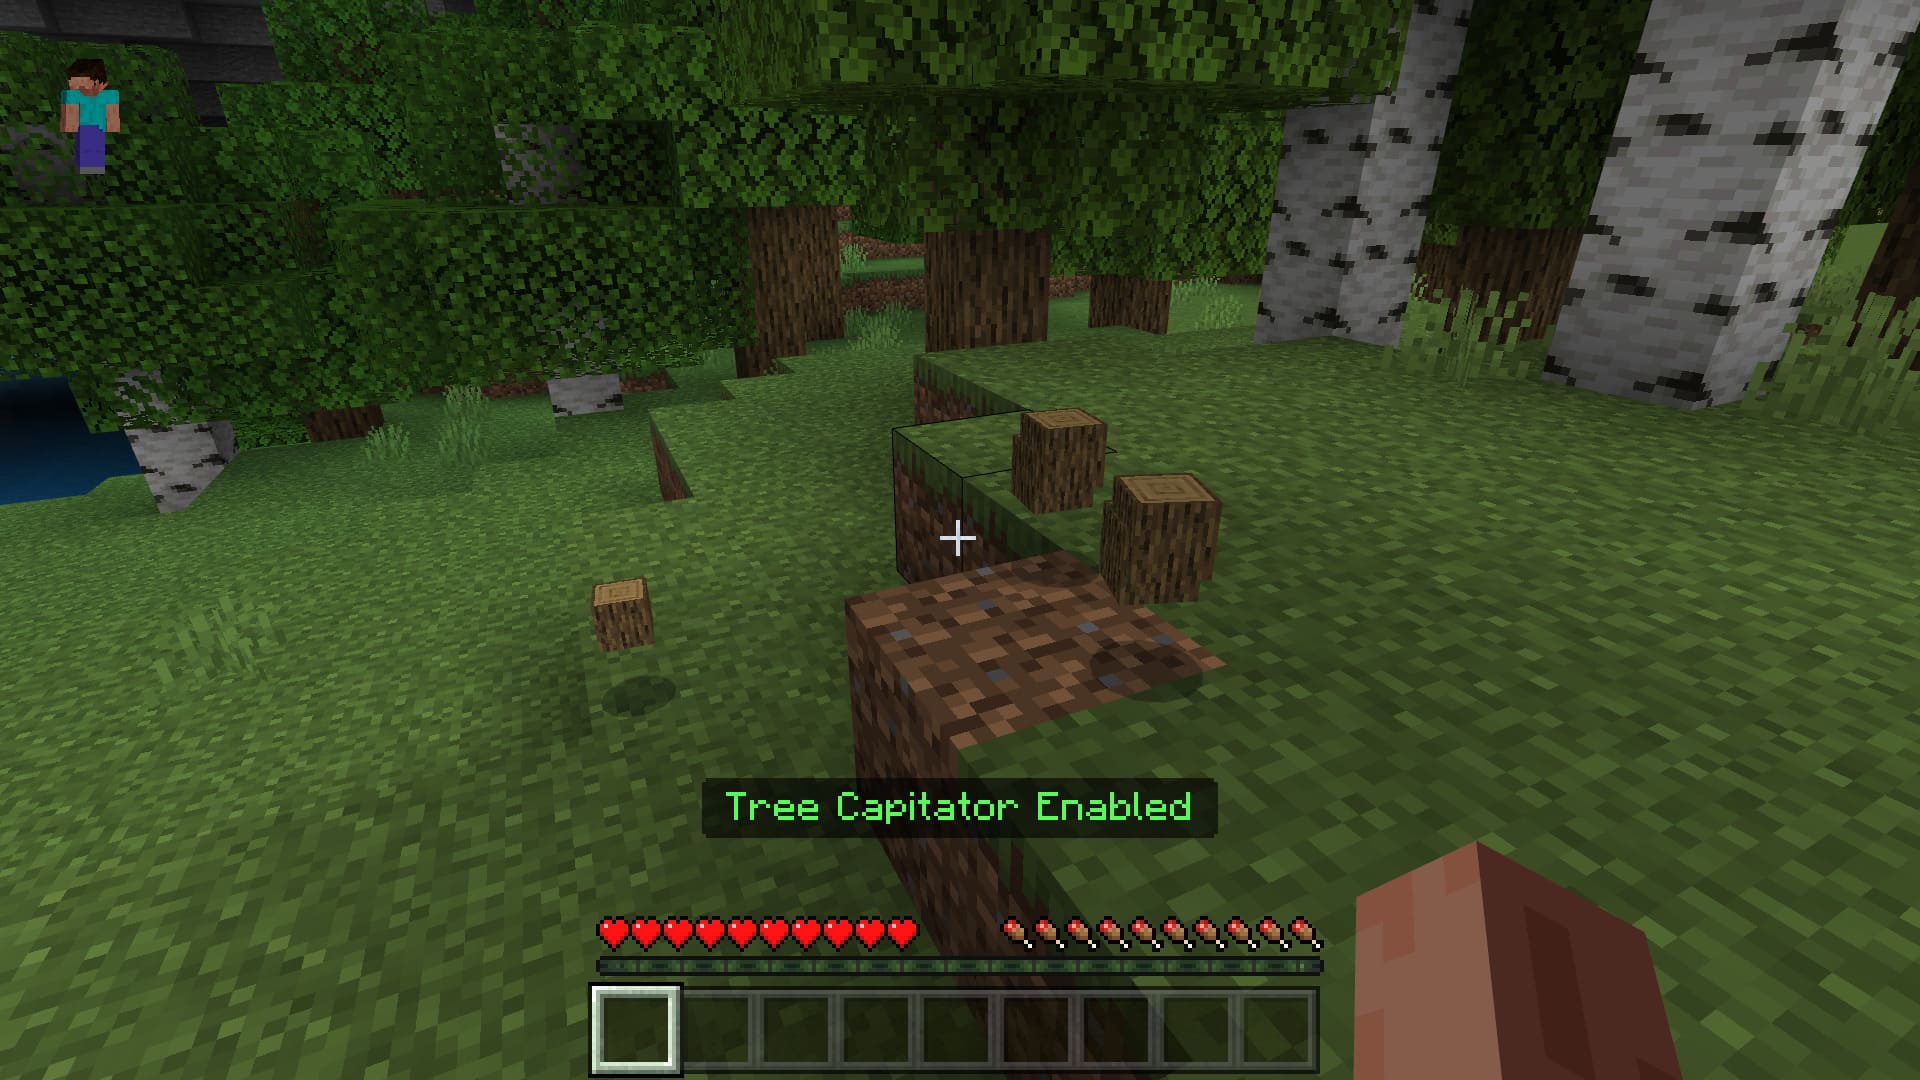 Break the whole tree in Minecraft